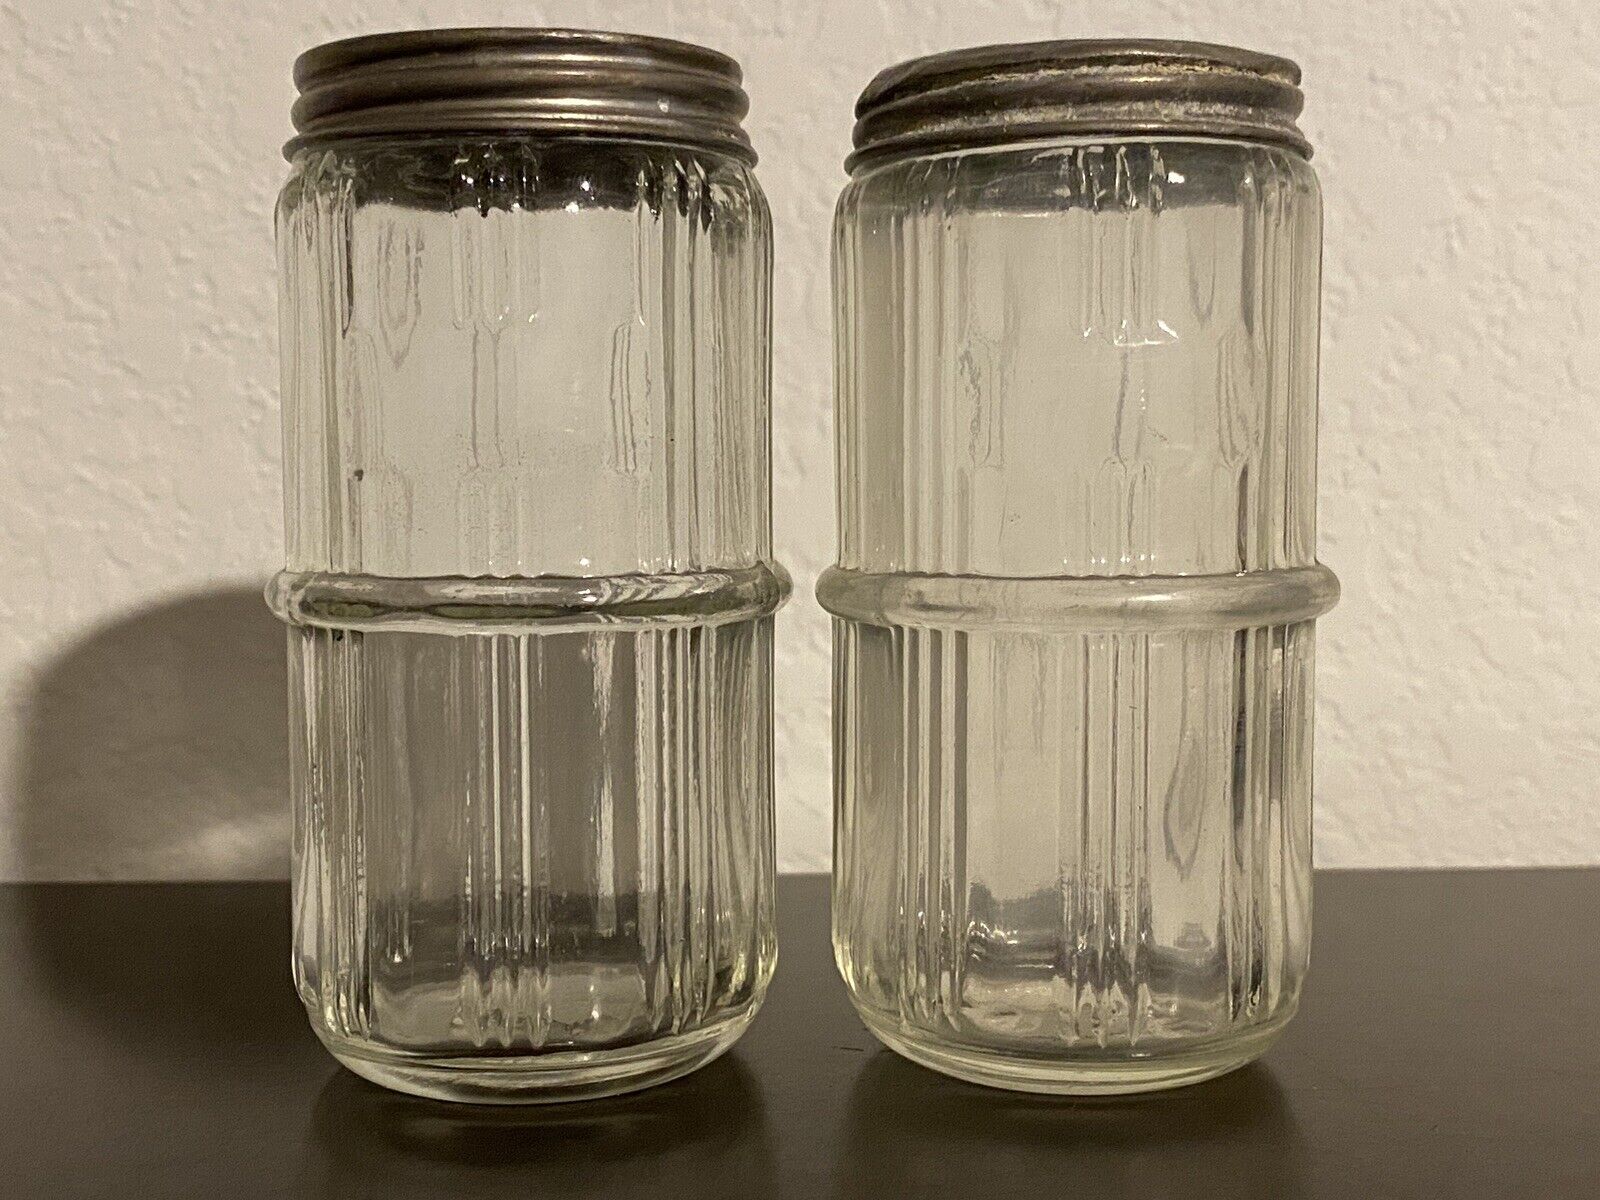 Lot of 2 Ribbed Hoosier Cabinet Glass Spice Shaker Jars w/ Lids